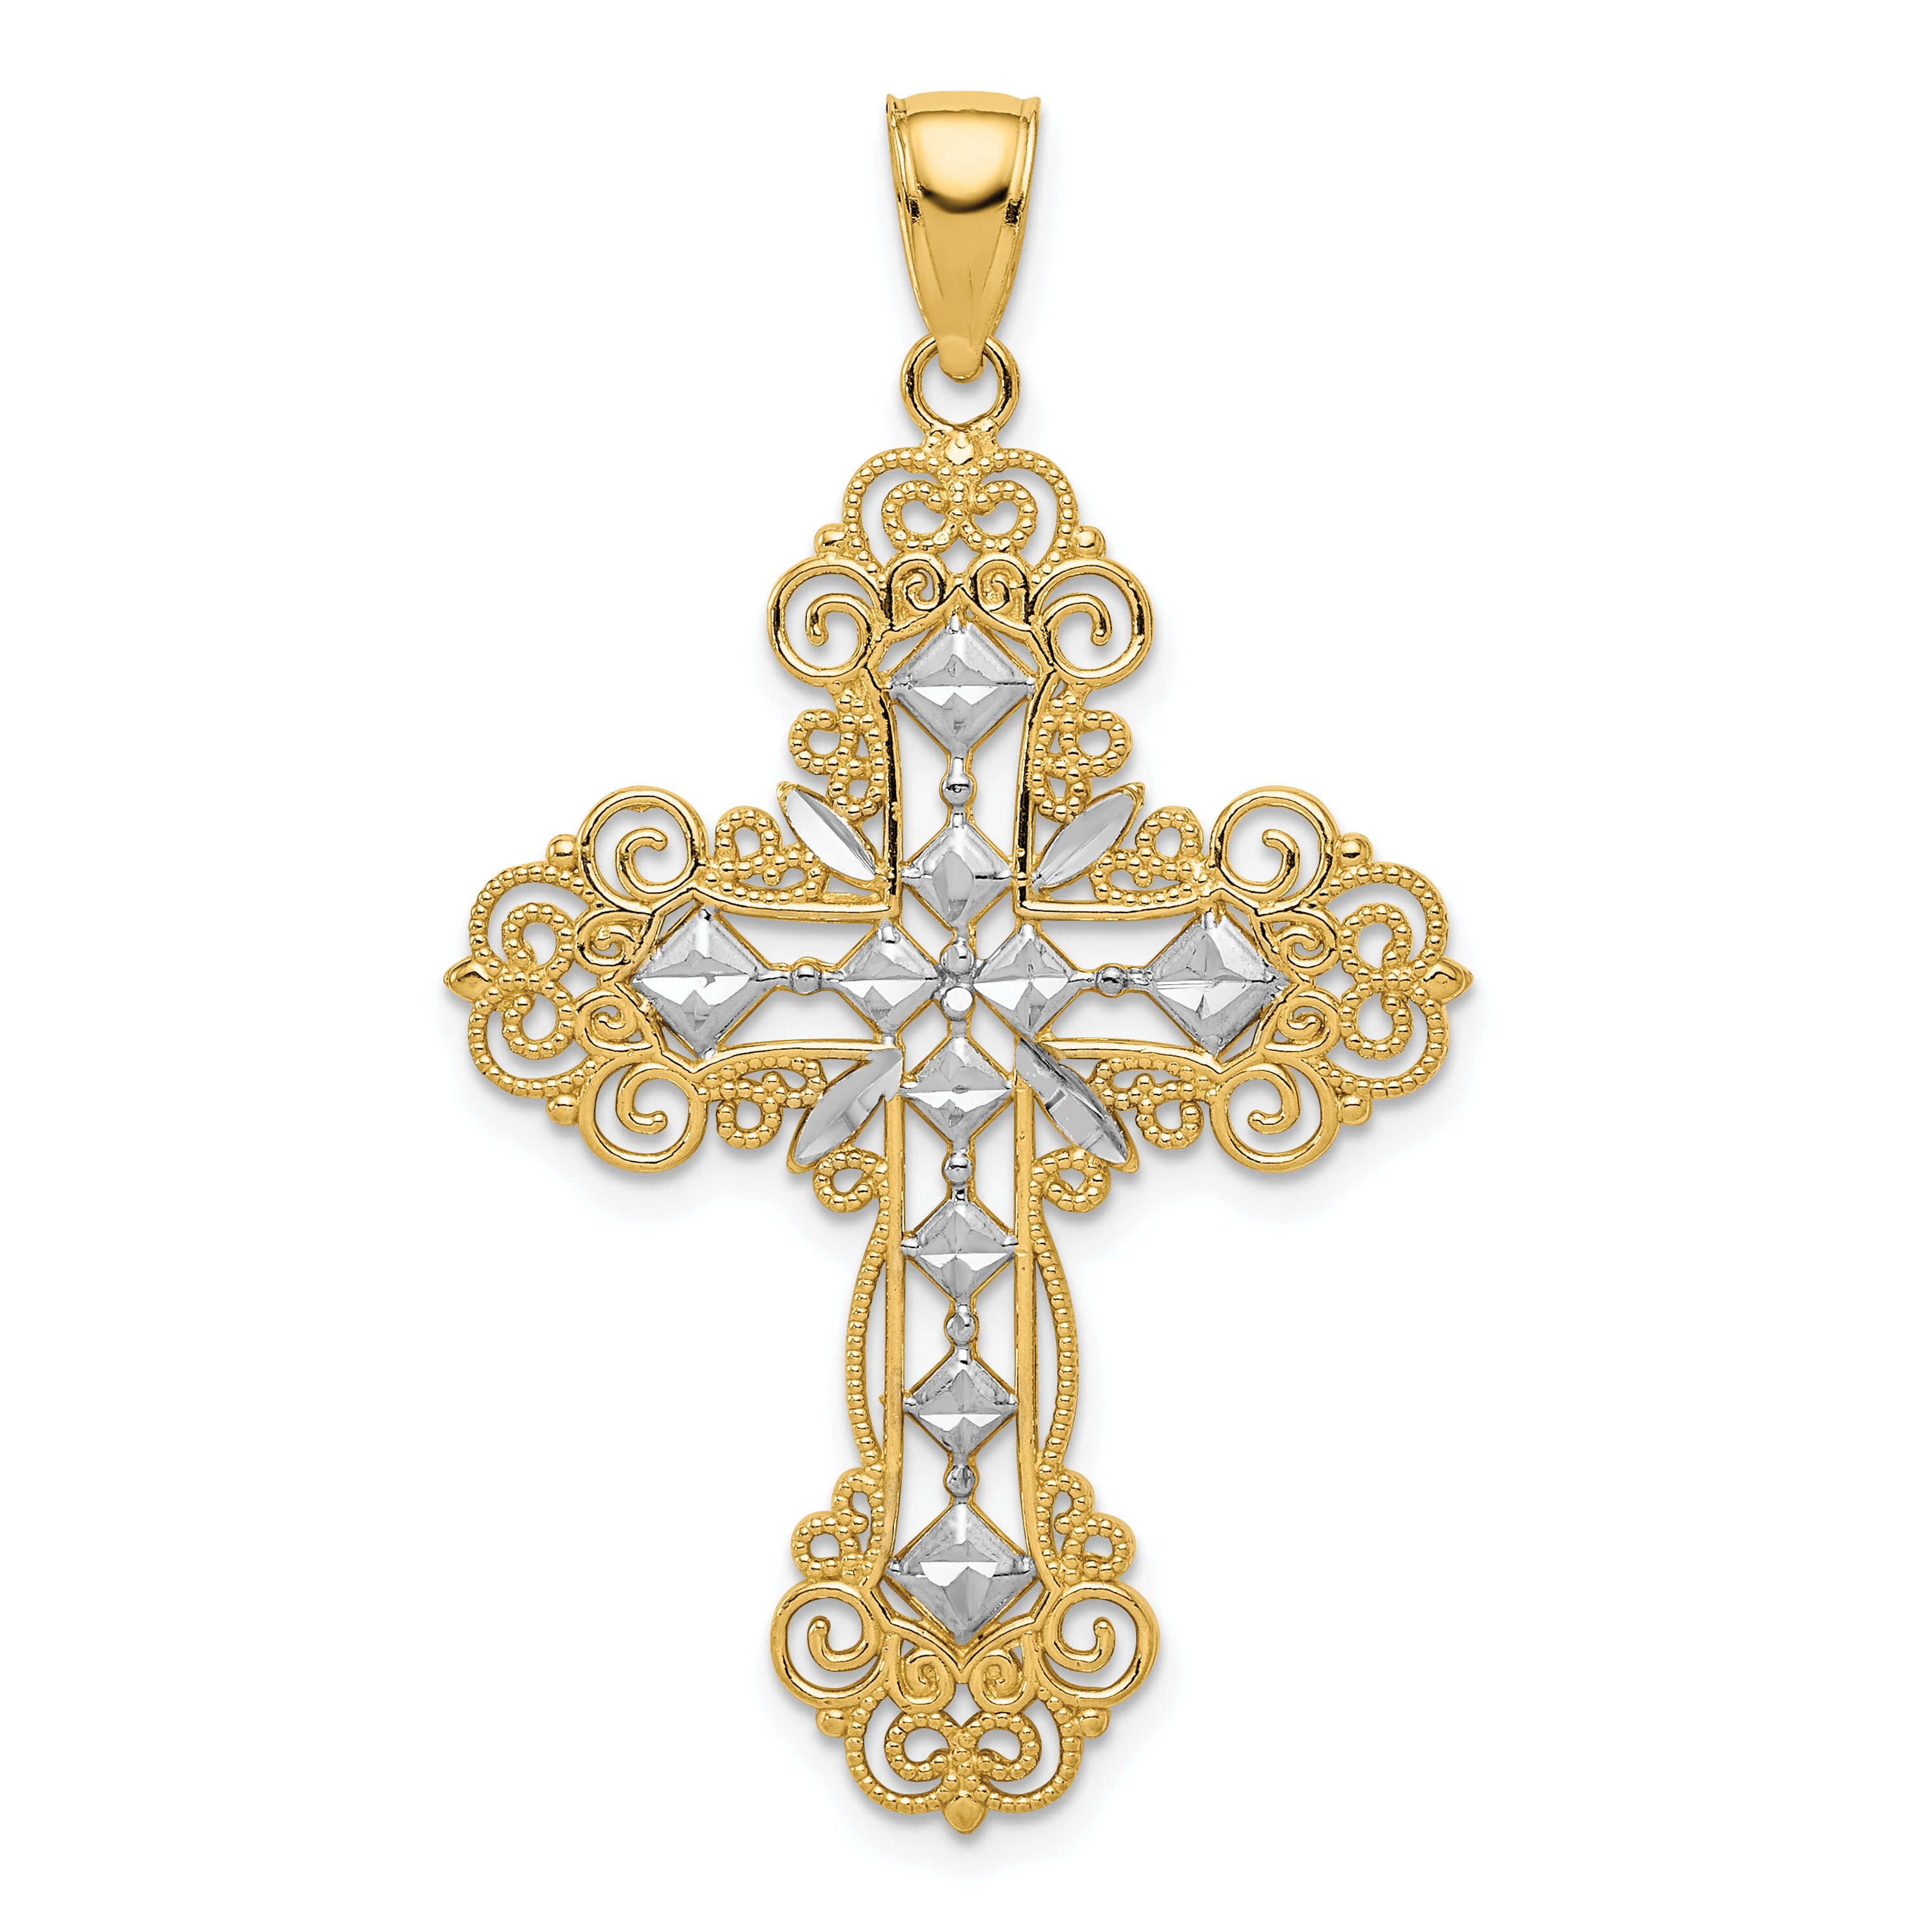 10K & Rhodium Polished & Textured Diamond Pattern Cross Pendant